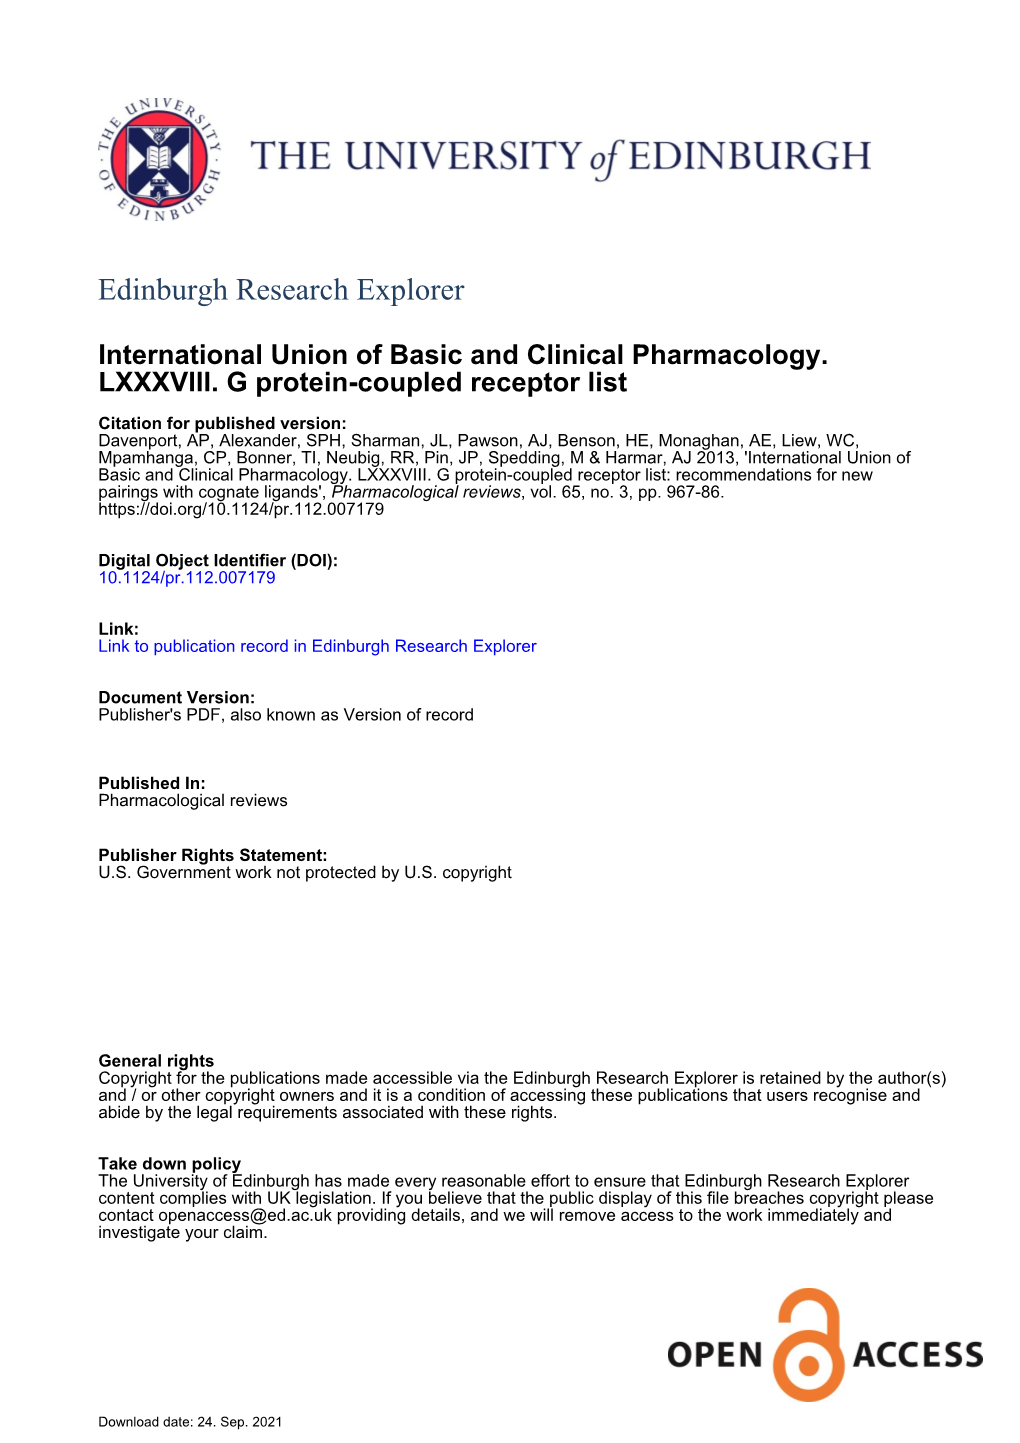 International Union of Basic and Clinical Pharmacology. LXXXVIII. G Protein-Coupled Receptor List